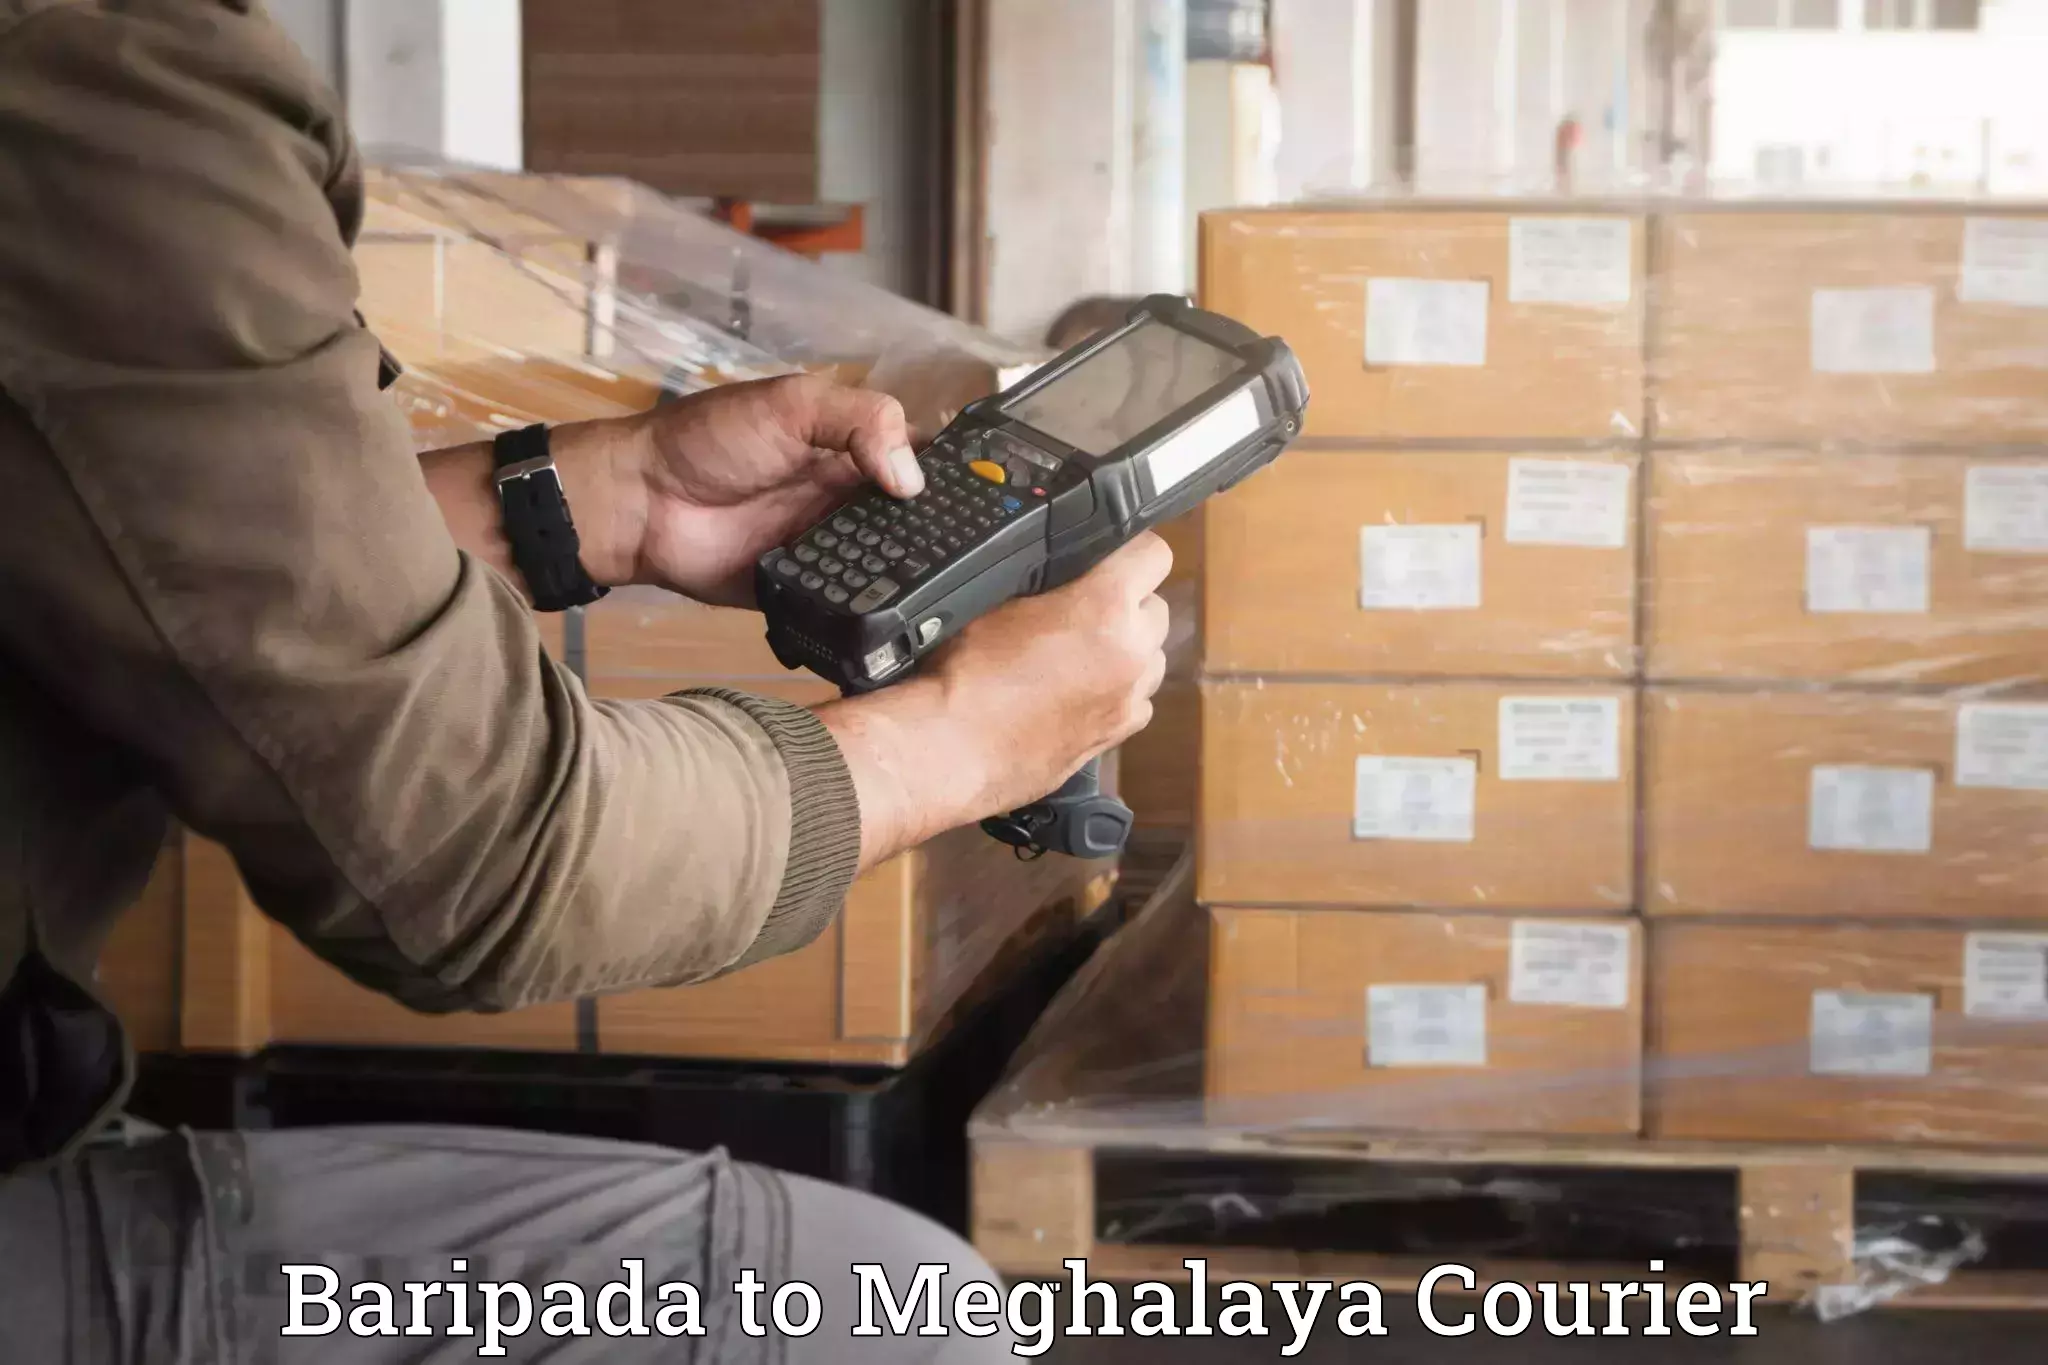 Professional moving company Baripada to Cherrapunji